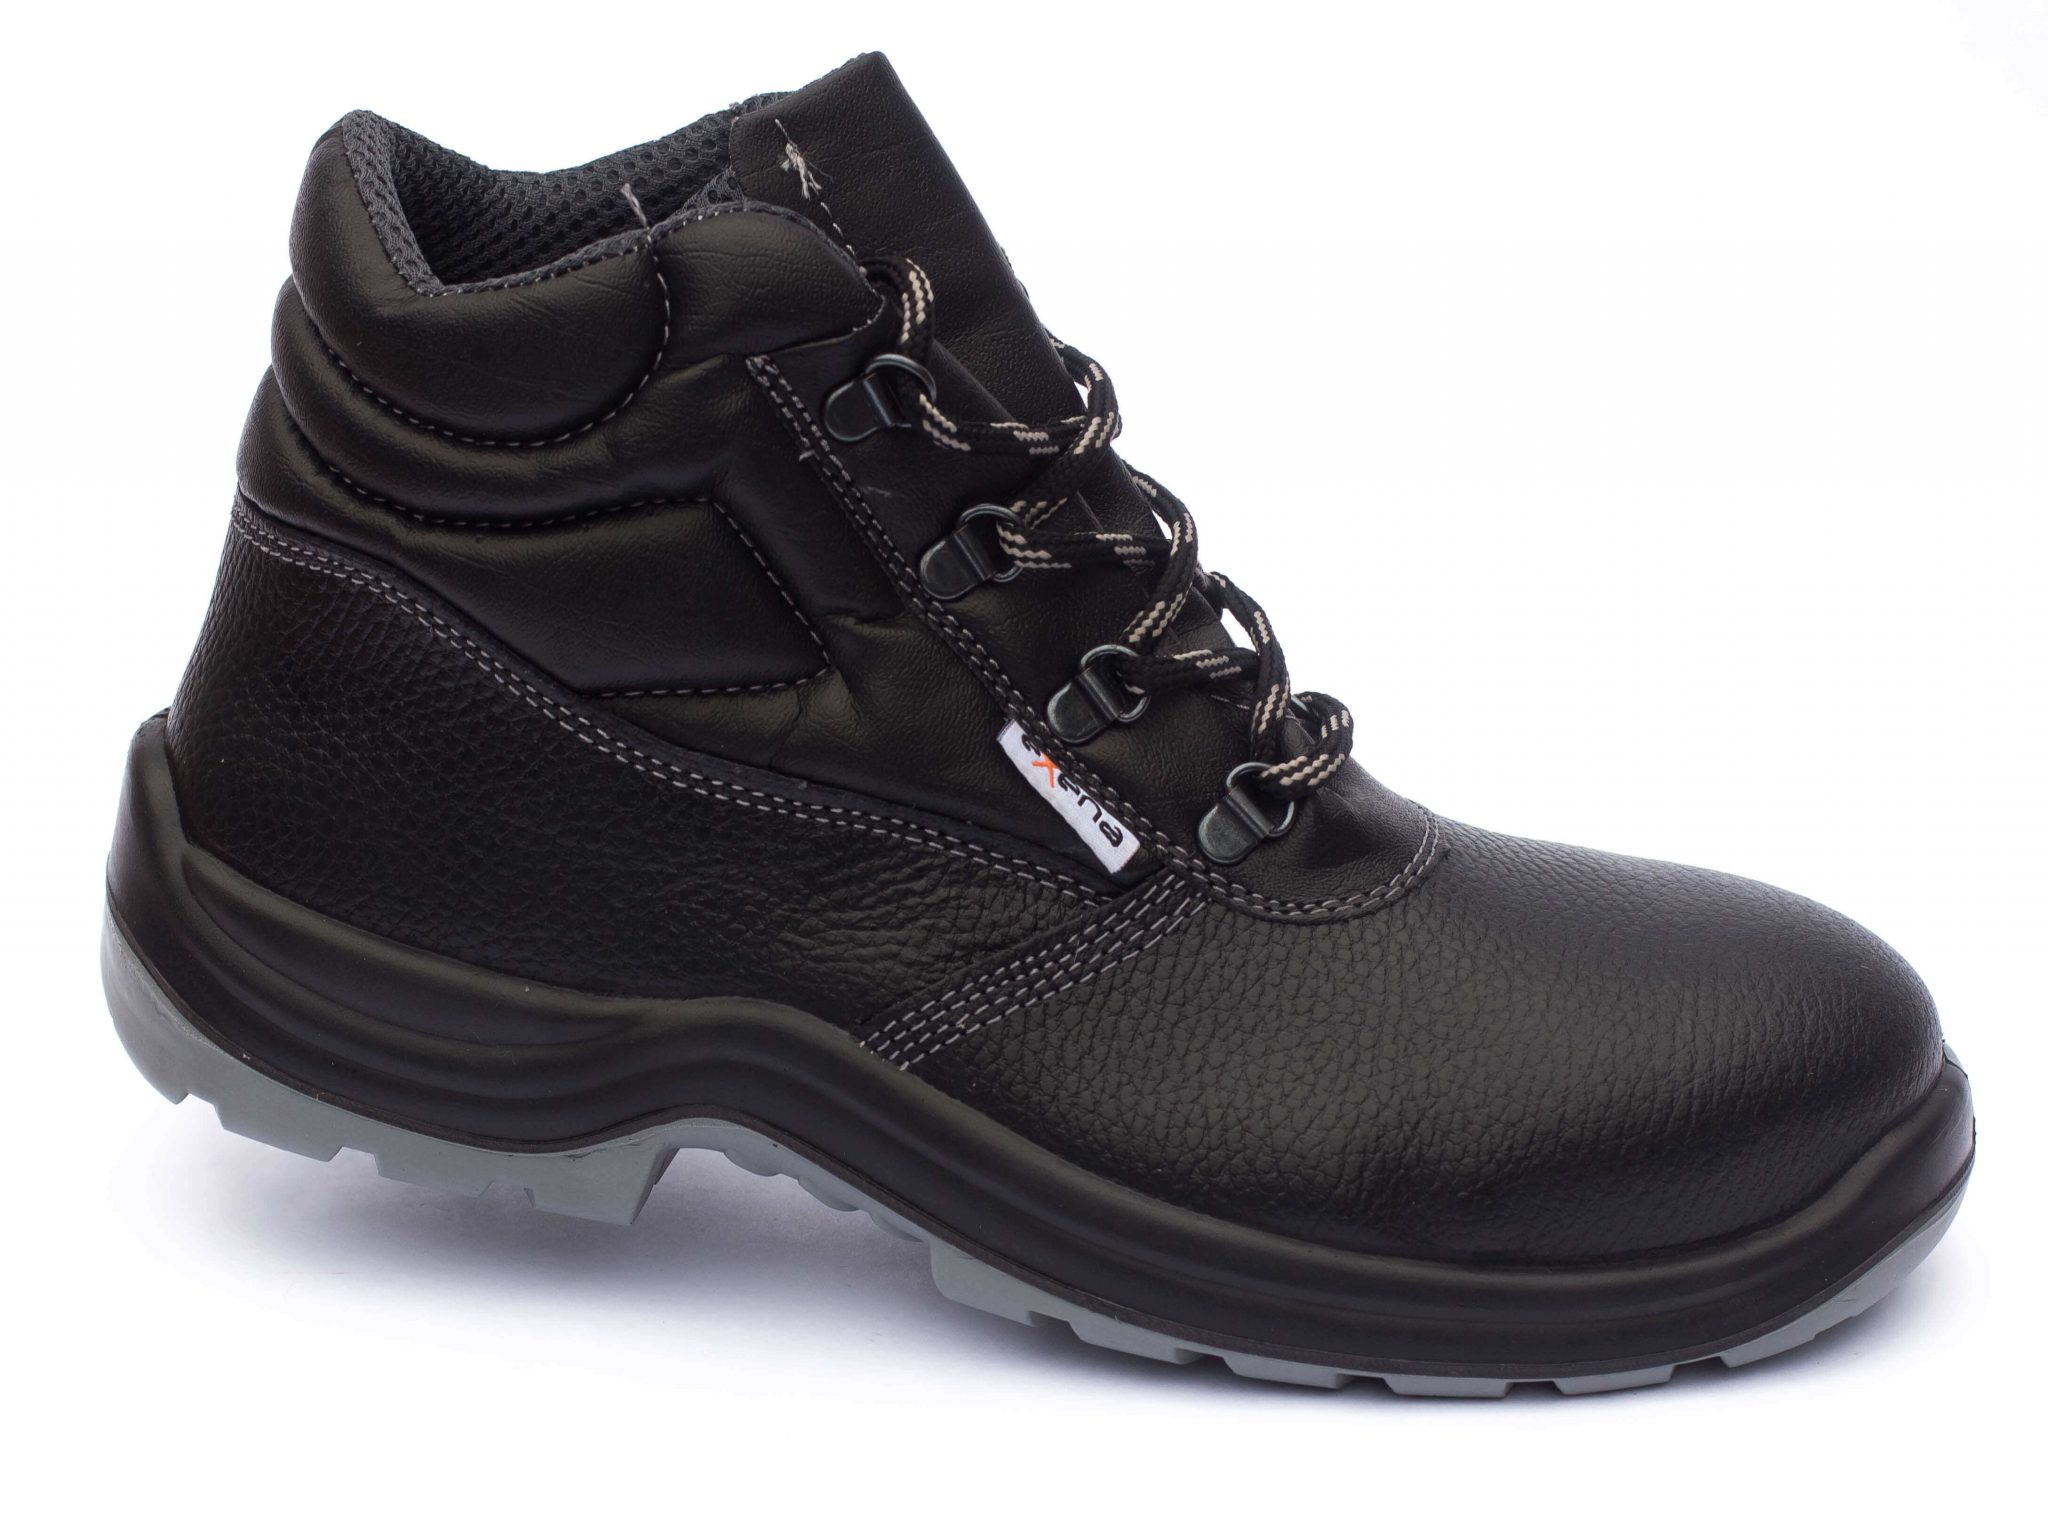 Leather boots EXENA Sardegna S3 SRC - UASAFETY